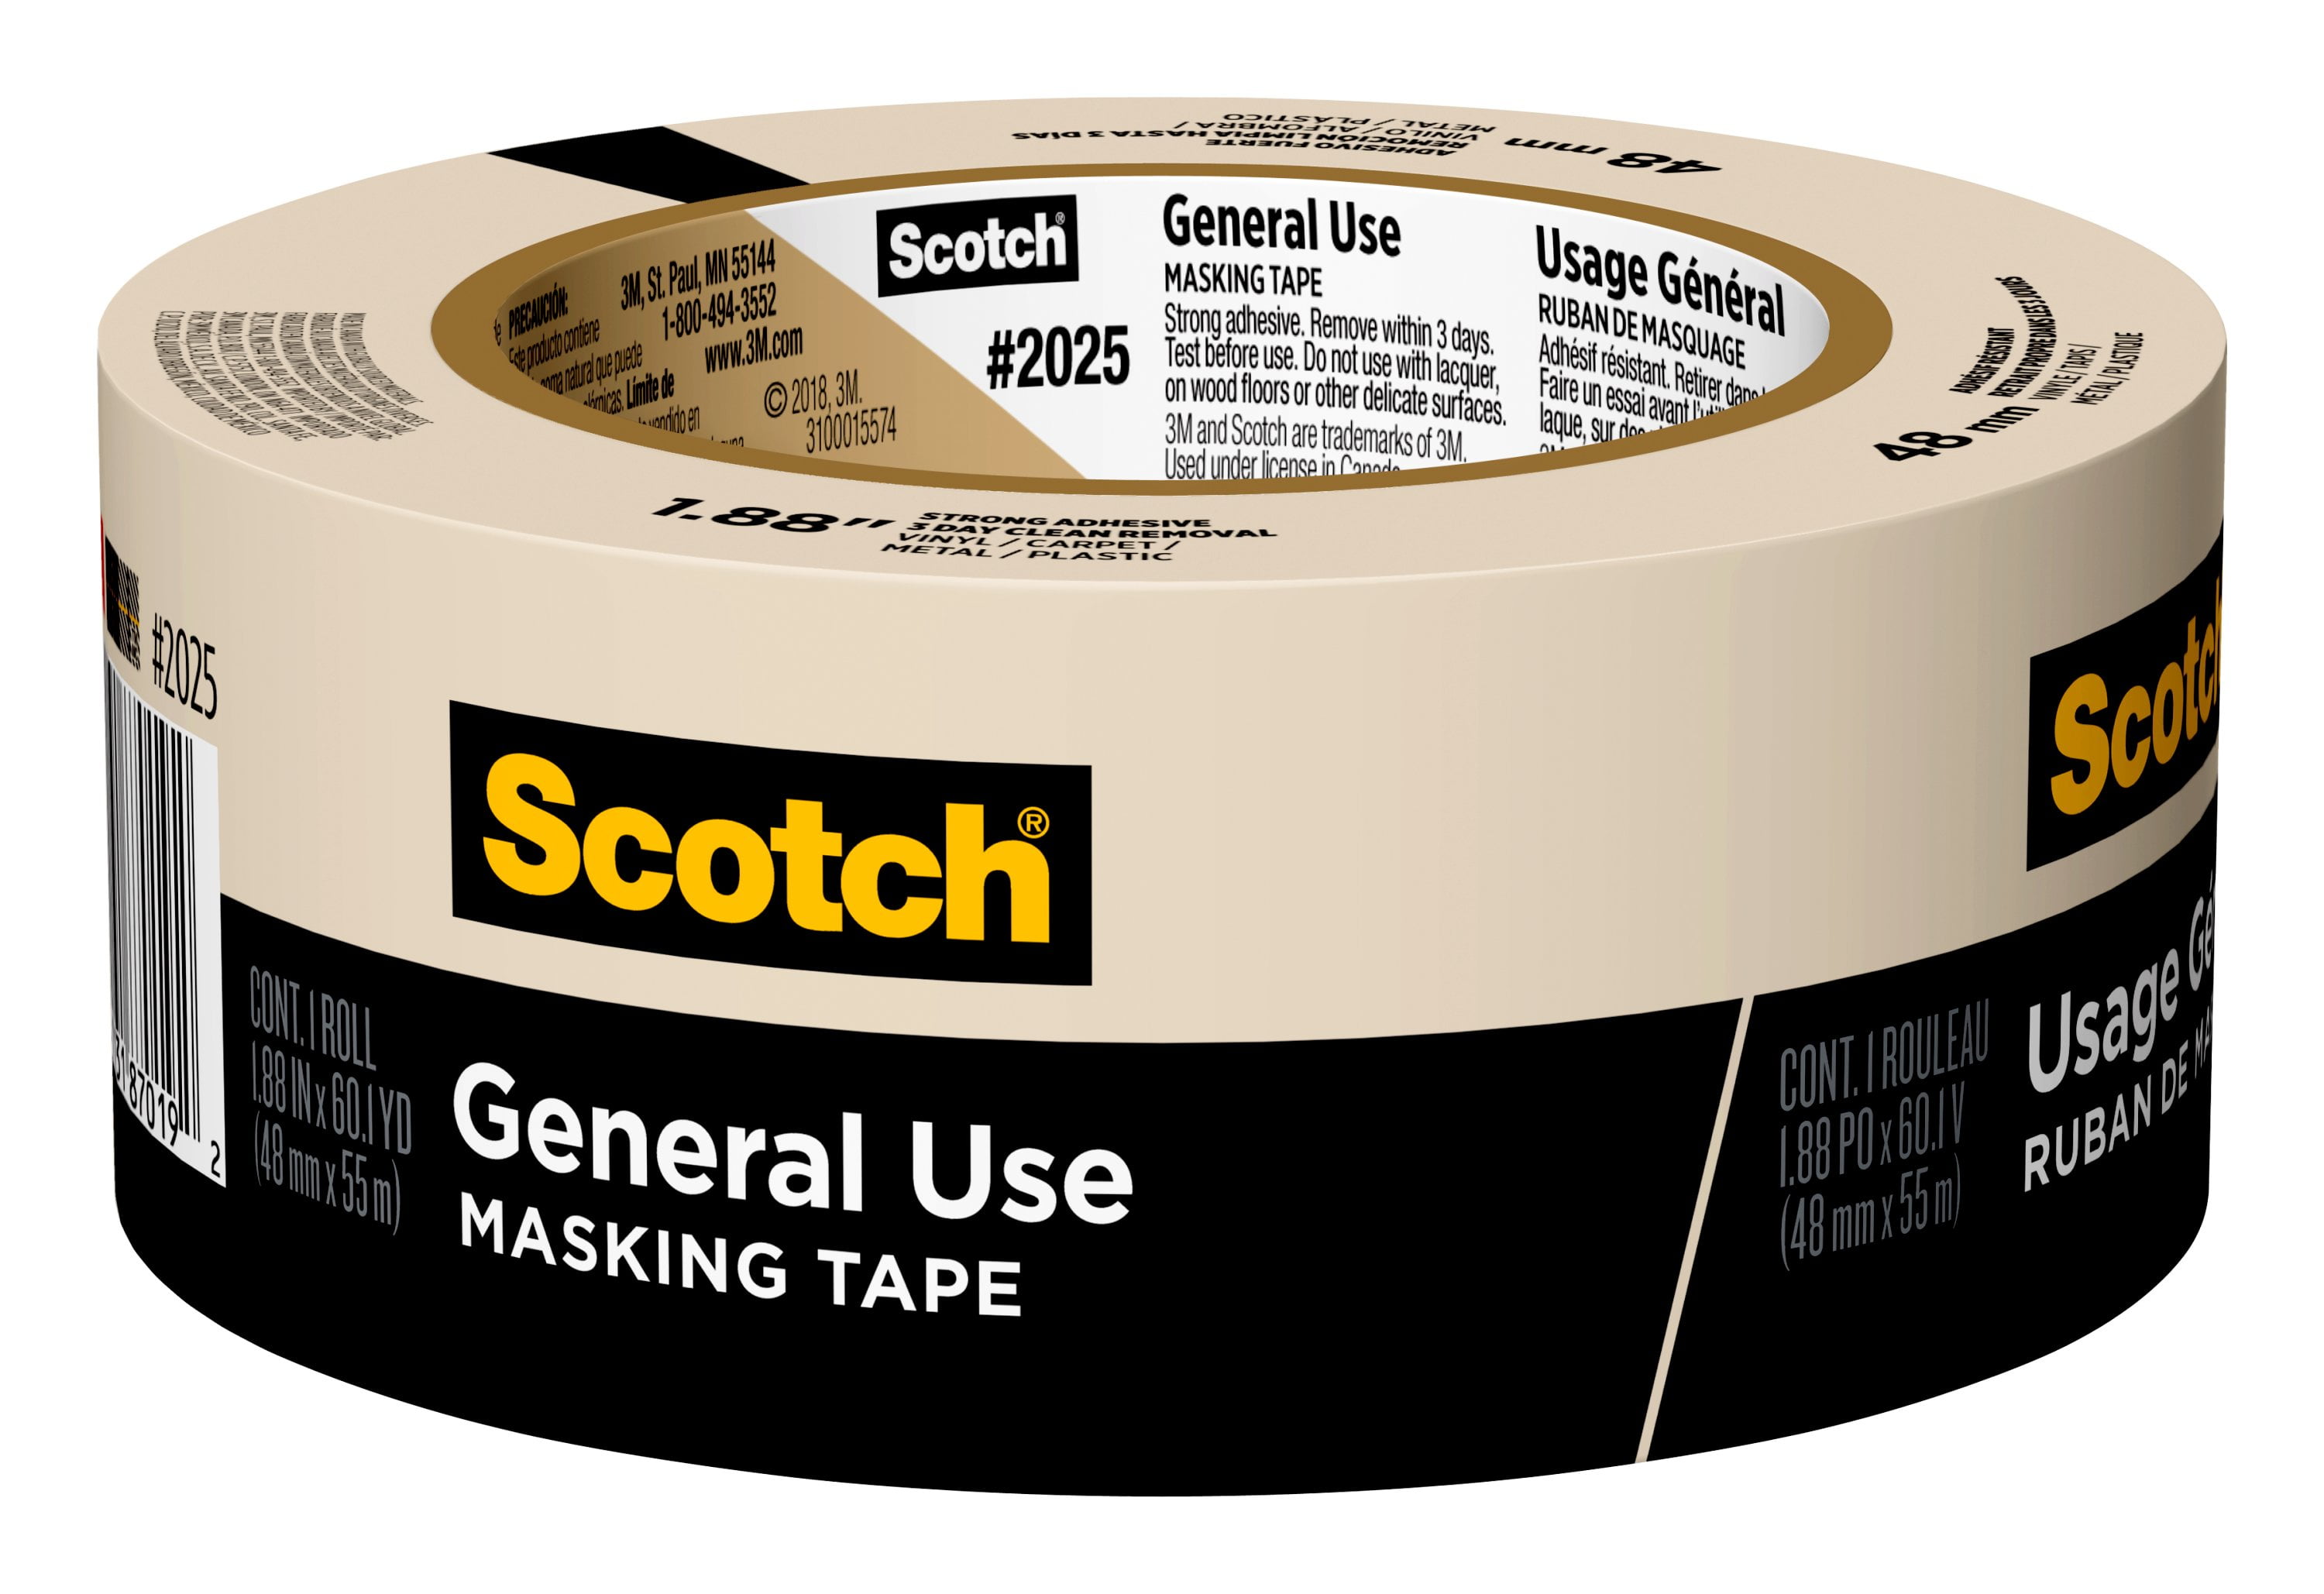 scotch-general-use-masking-tape-1-88-in-x-60-1-yd-tan-1-roll